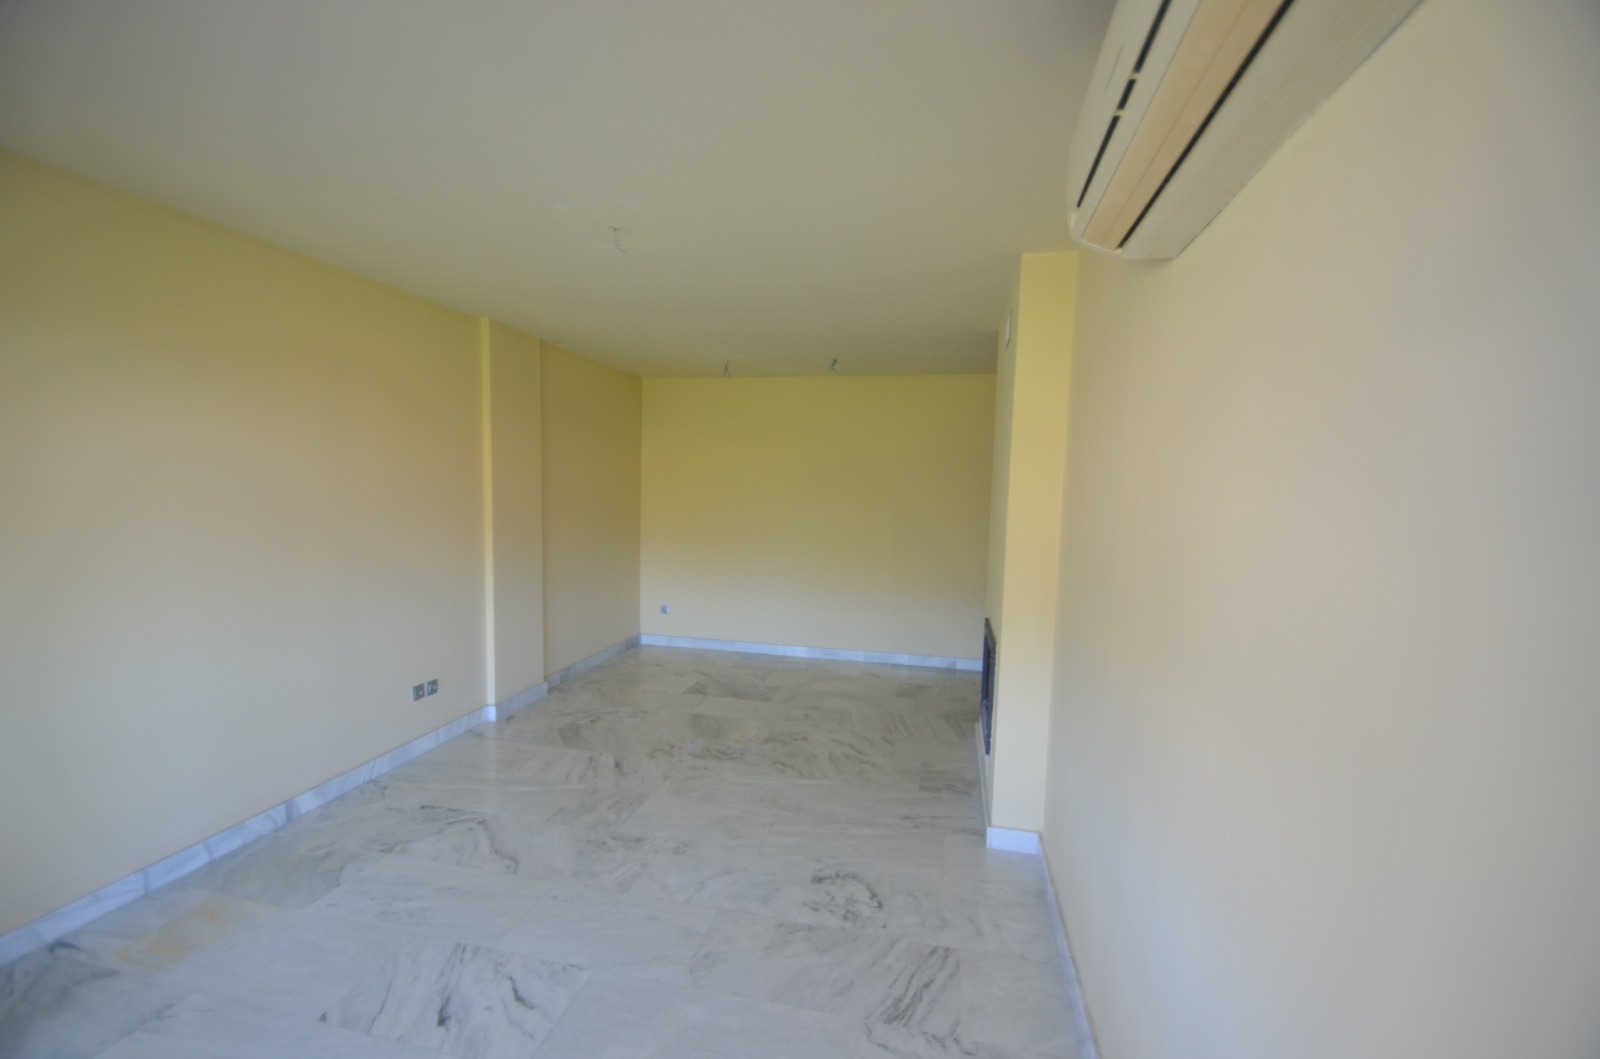 1 bedroom apartment for rent in Benahavis unfurnished - mibgroup.es